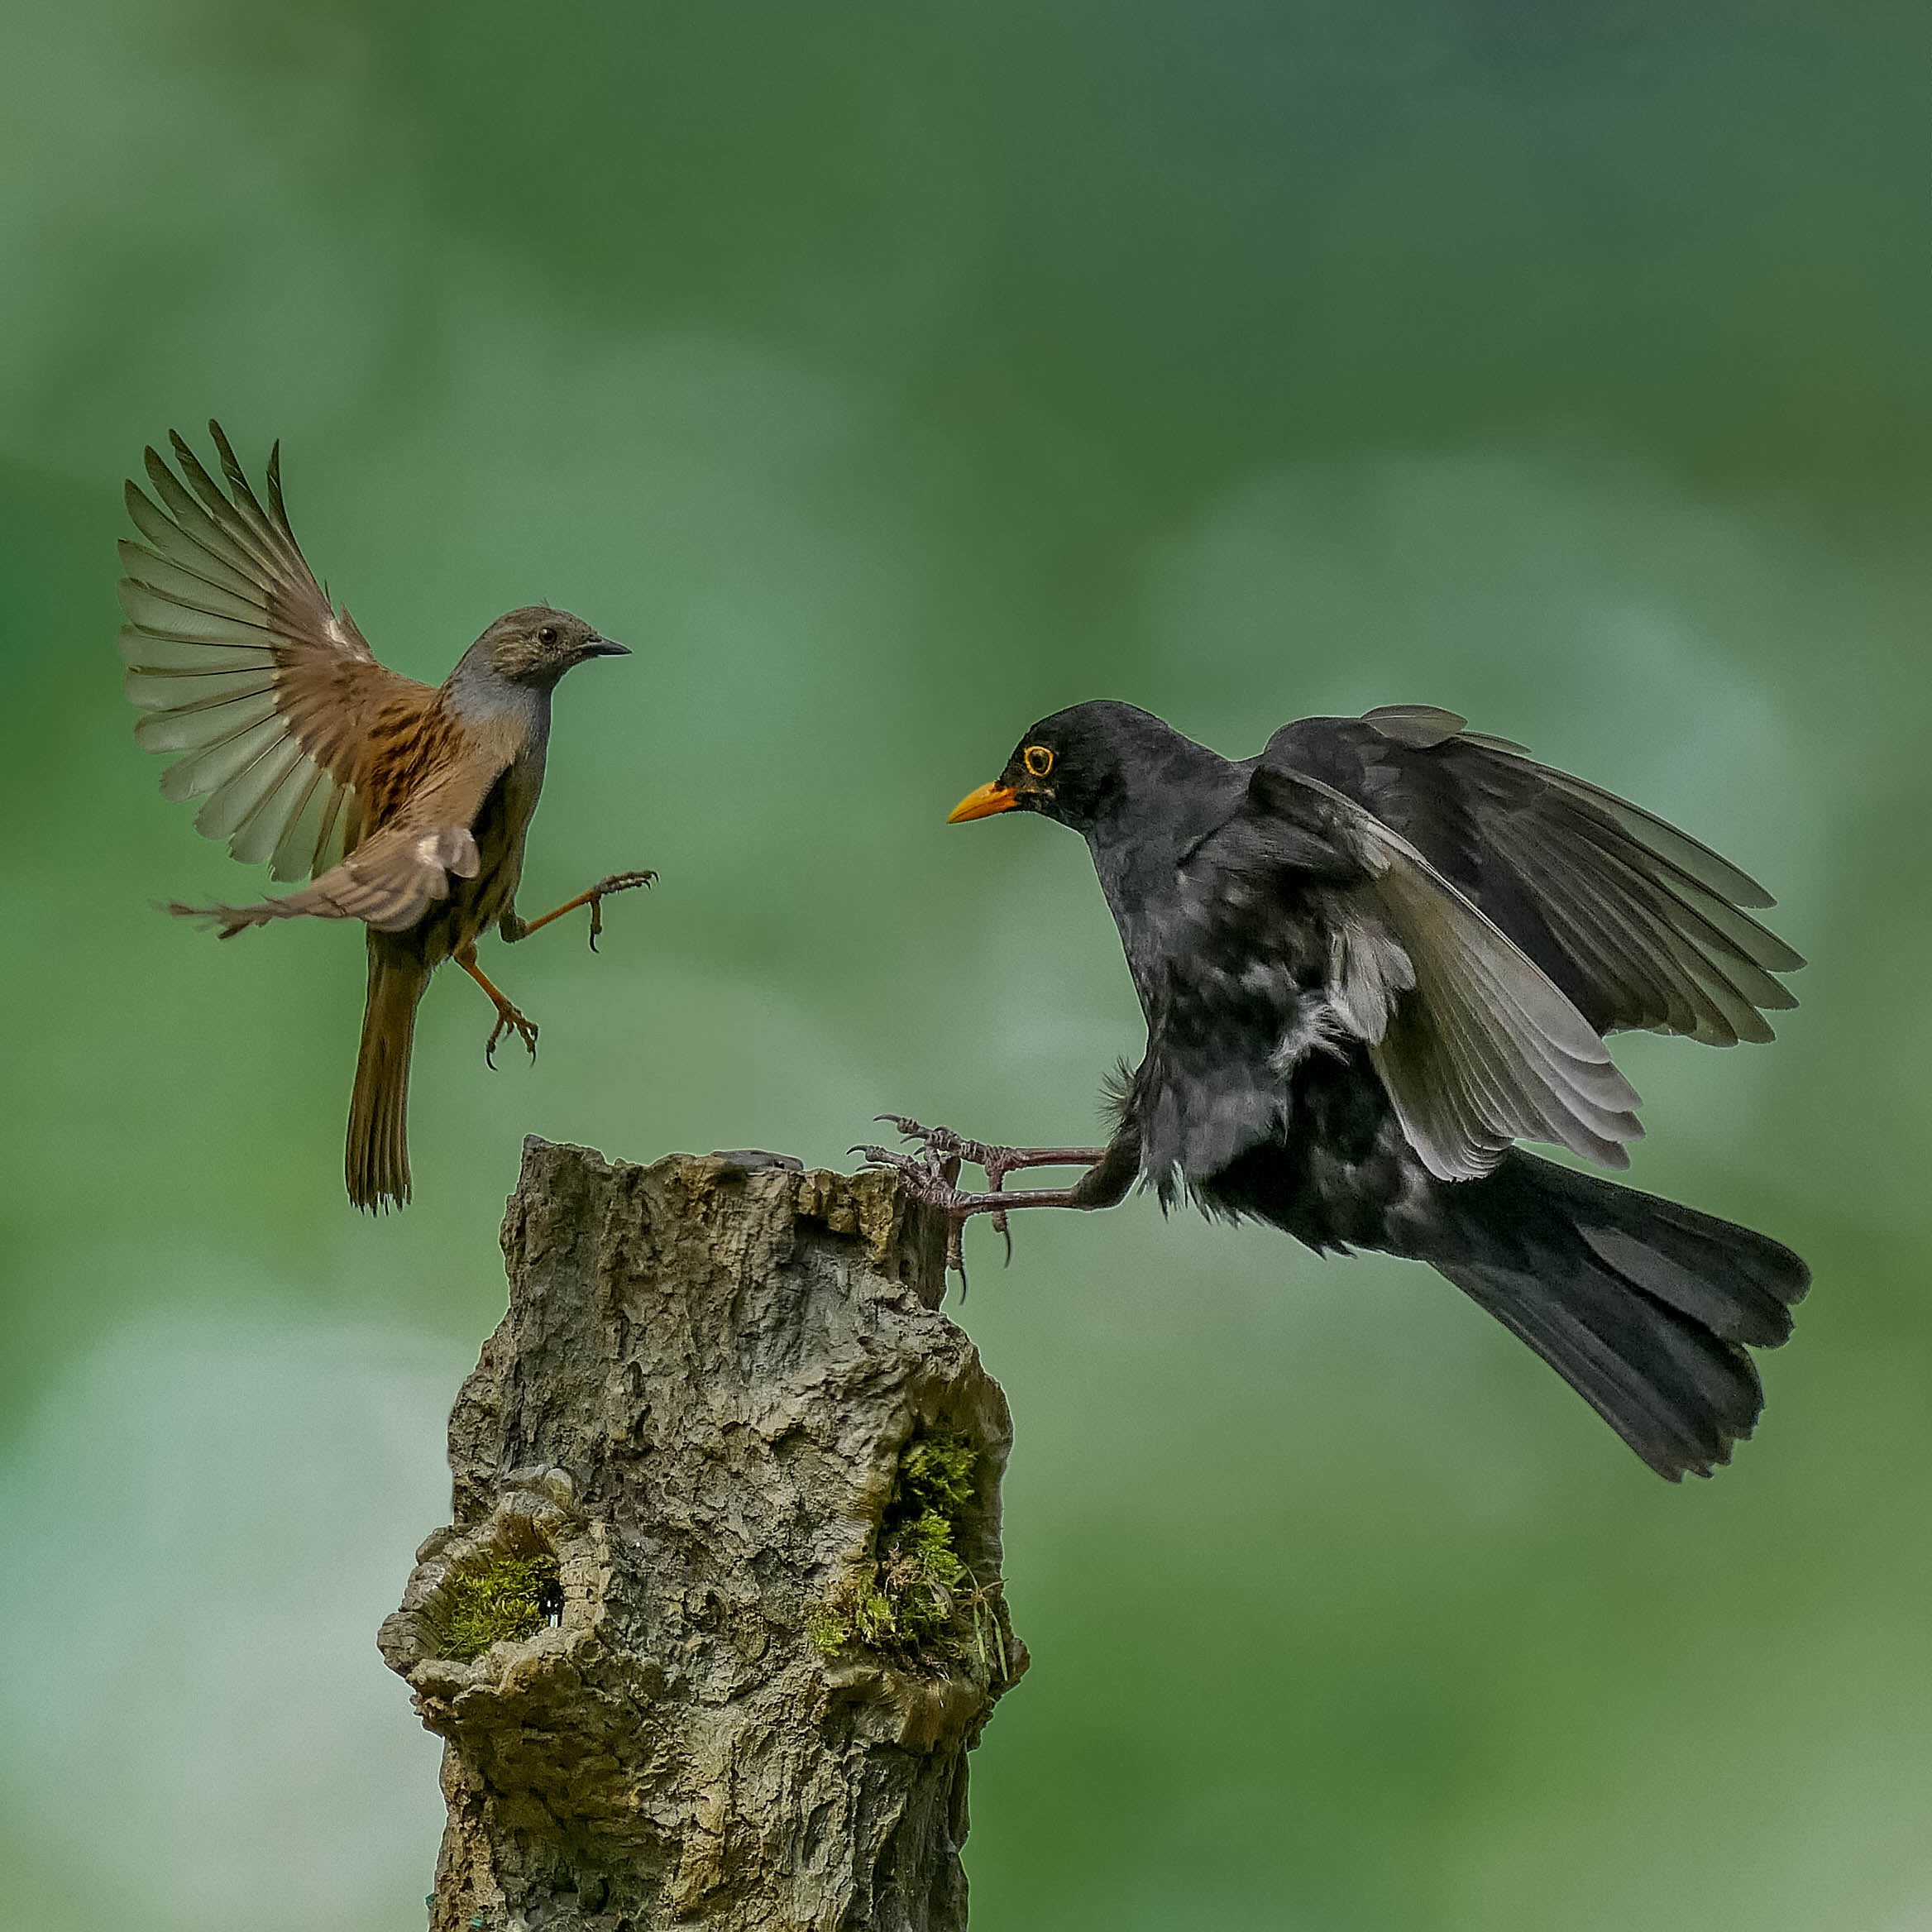 brown and black birds, Unfair, birds  birds, action, fighting birds